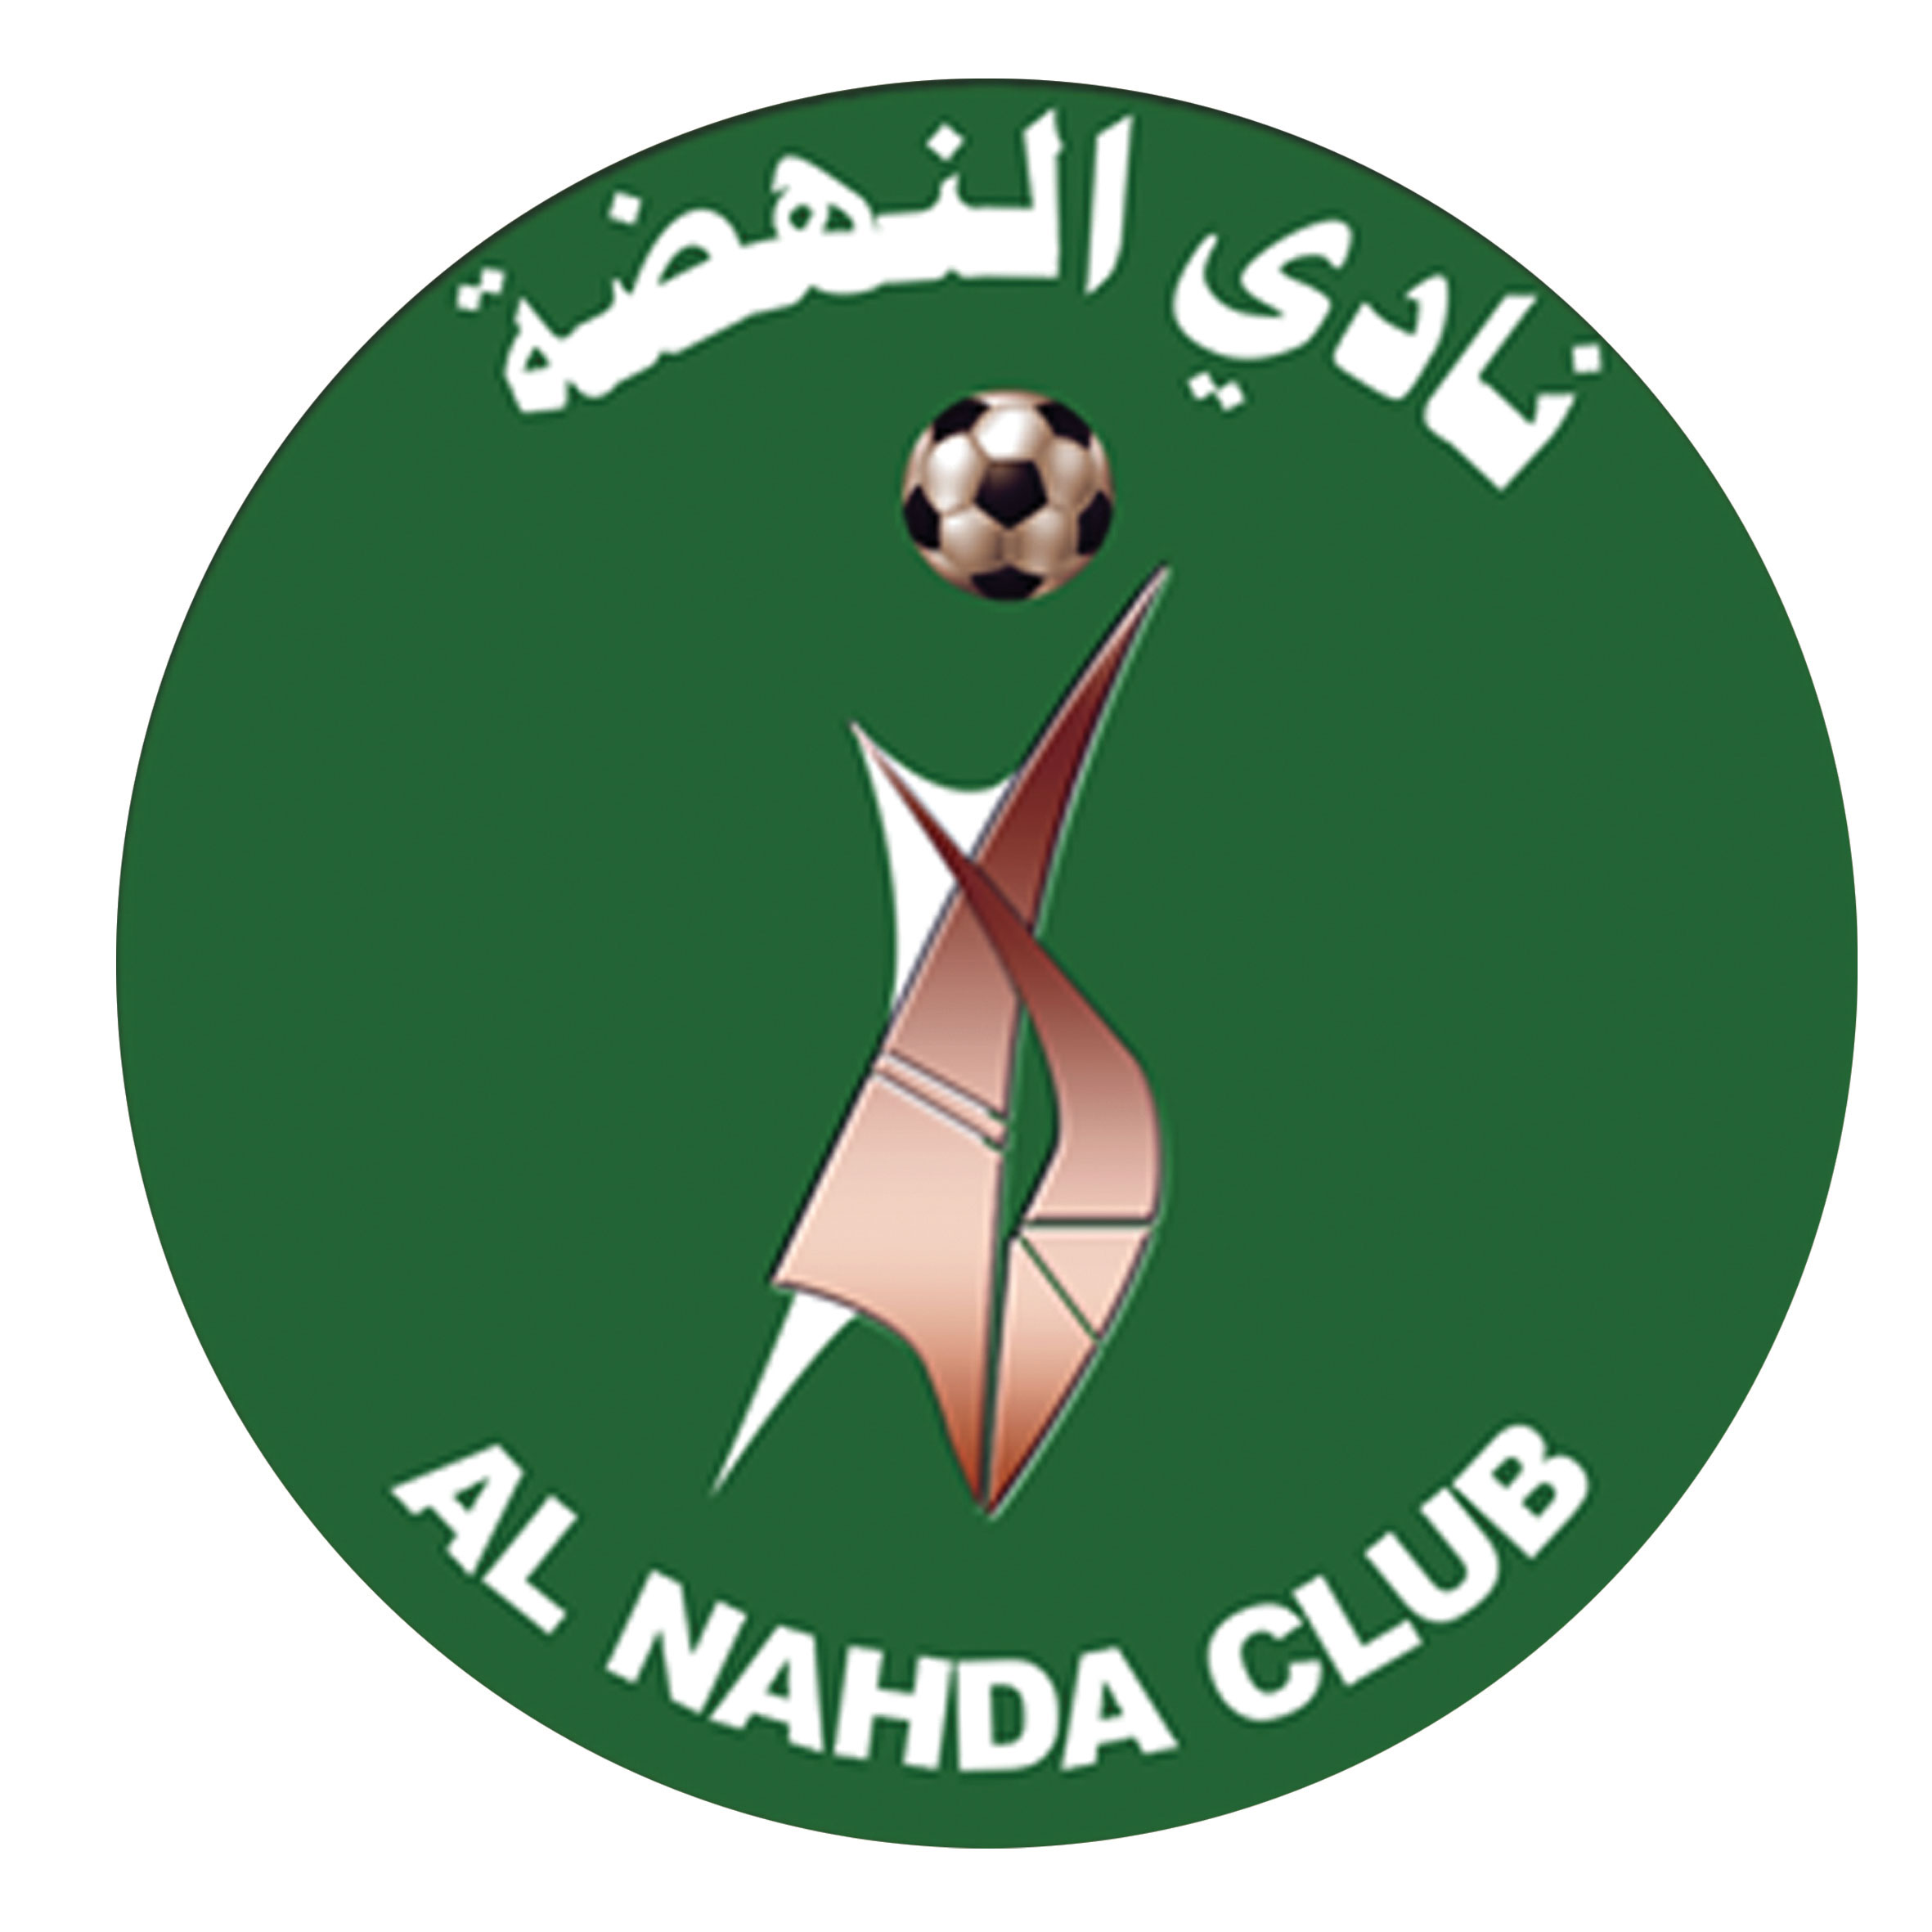 Al Nadha Club